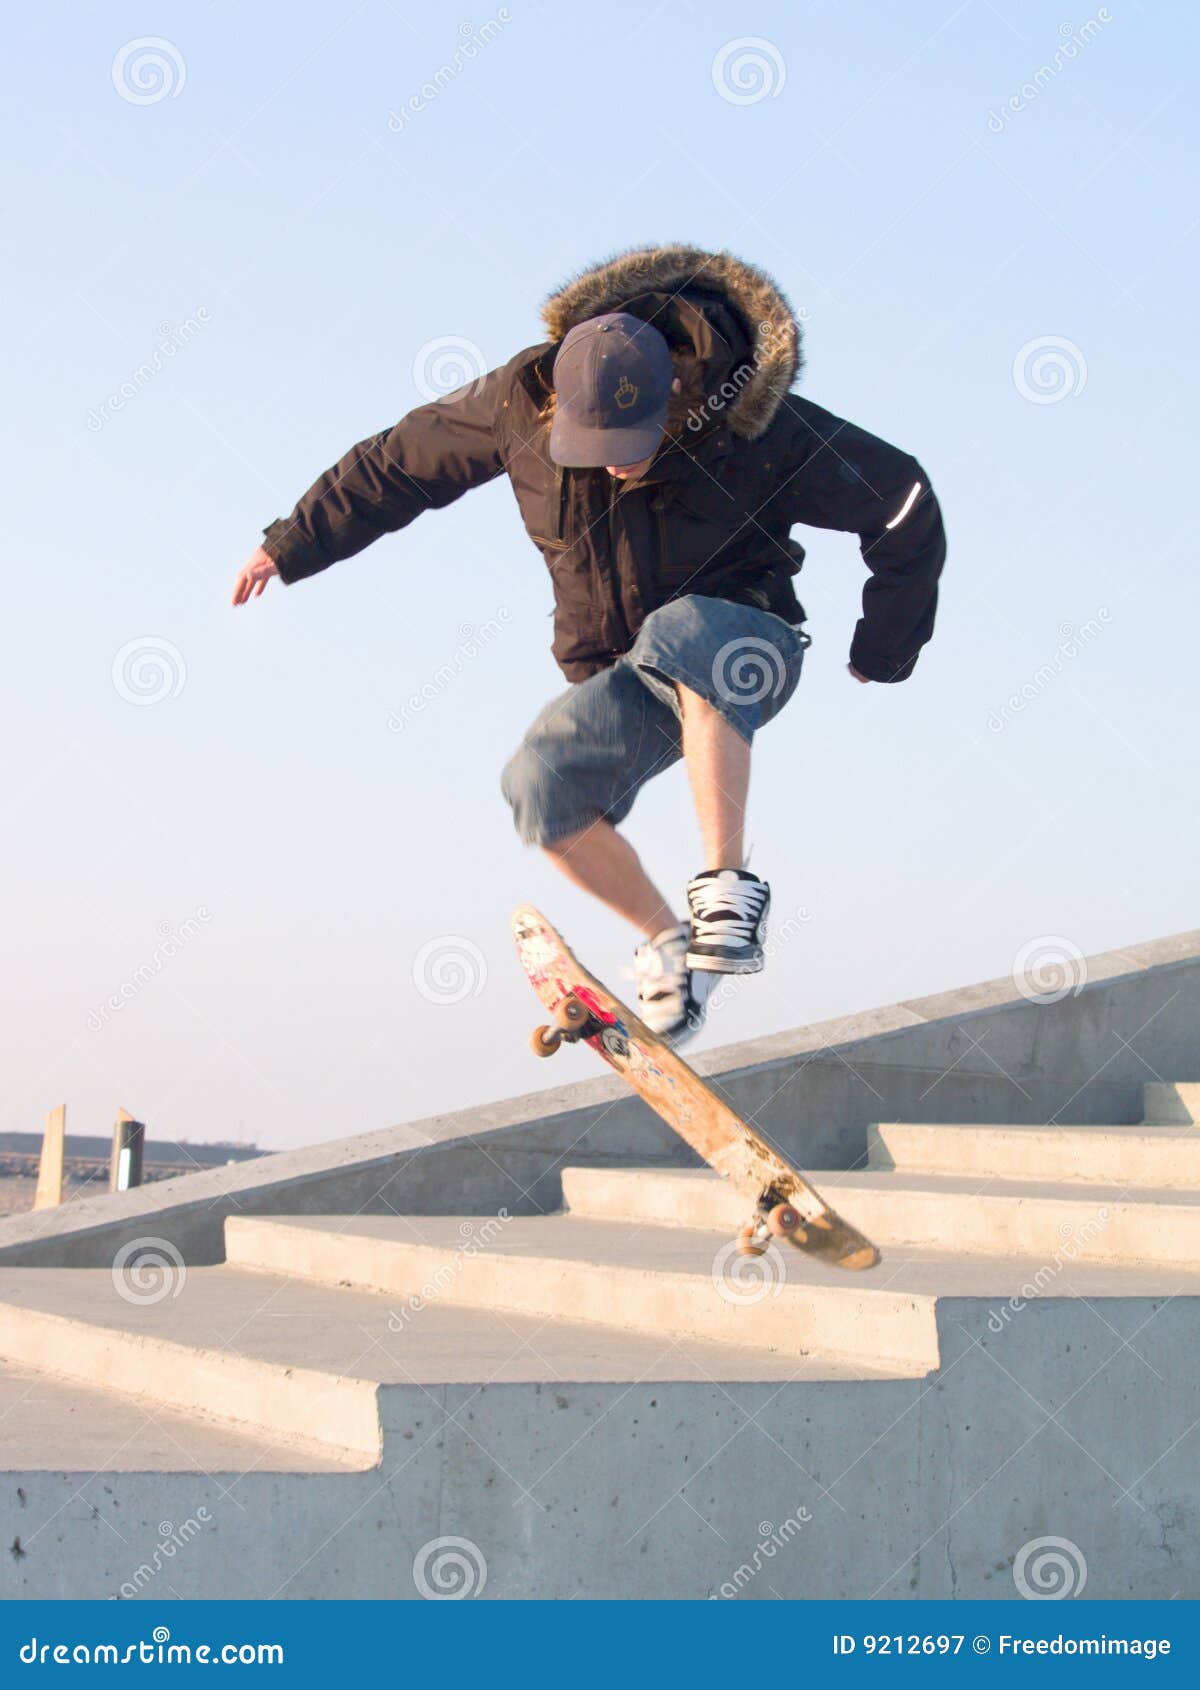 Skateboard Stunts